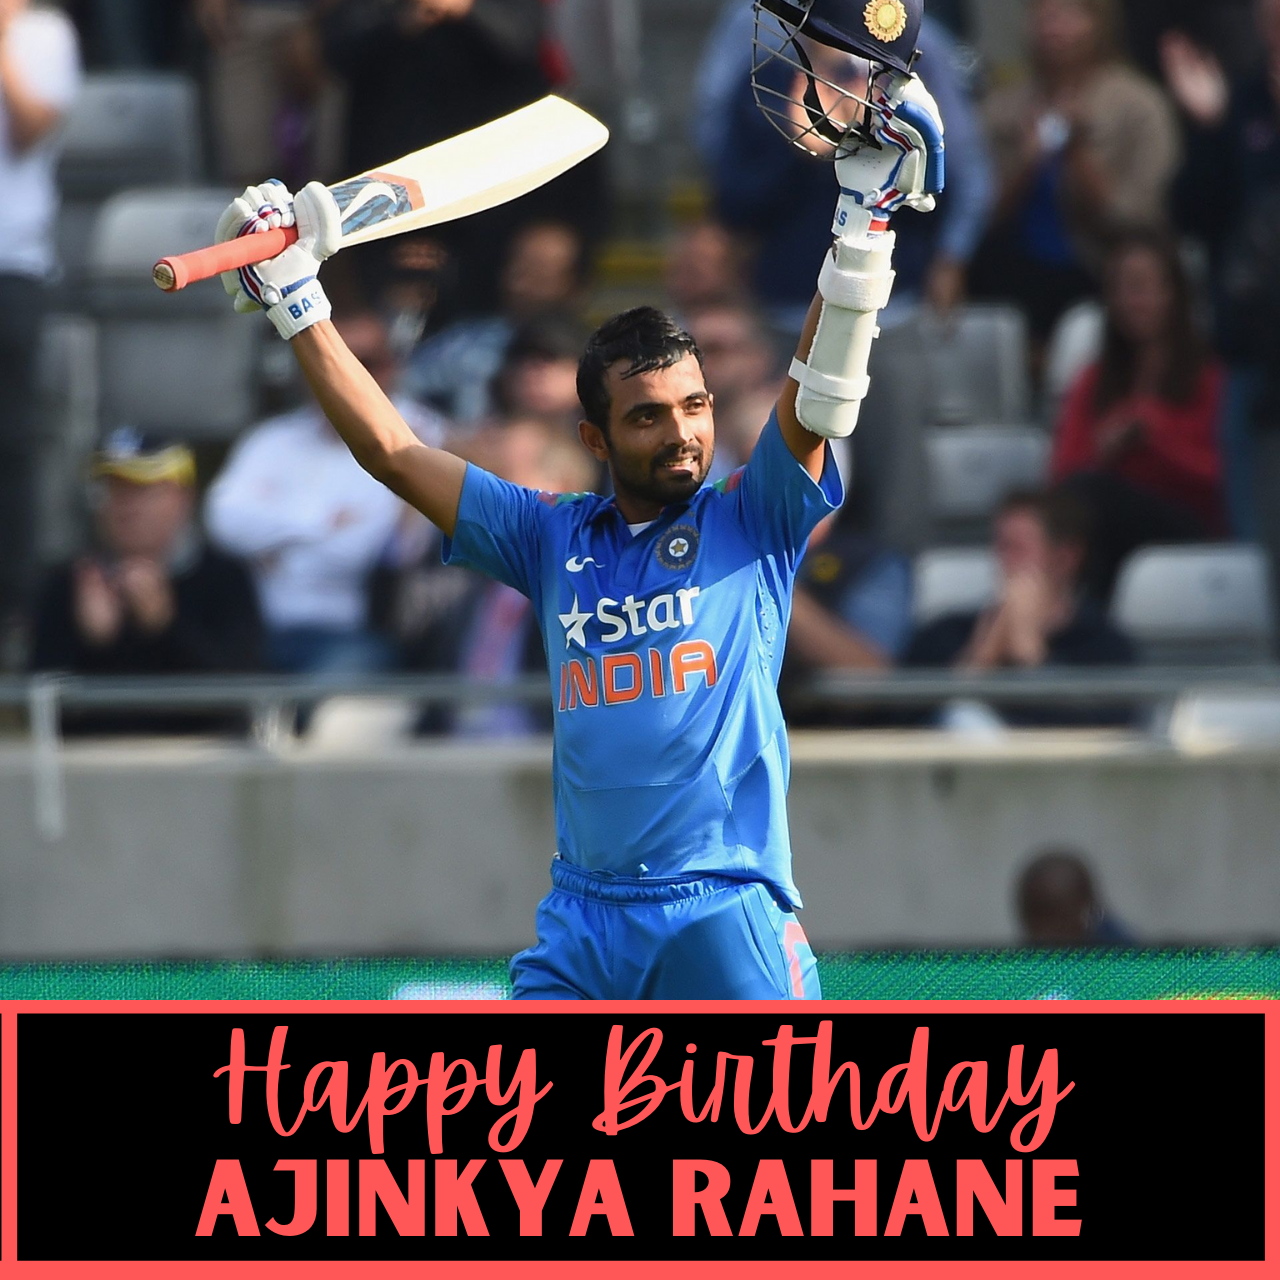 Happy Birthday Ajinkya Rahane: Wishes, Images (Photos), Greetings, and Quotes to wish Vice-Captain of India